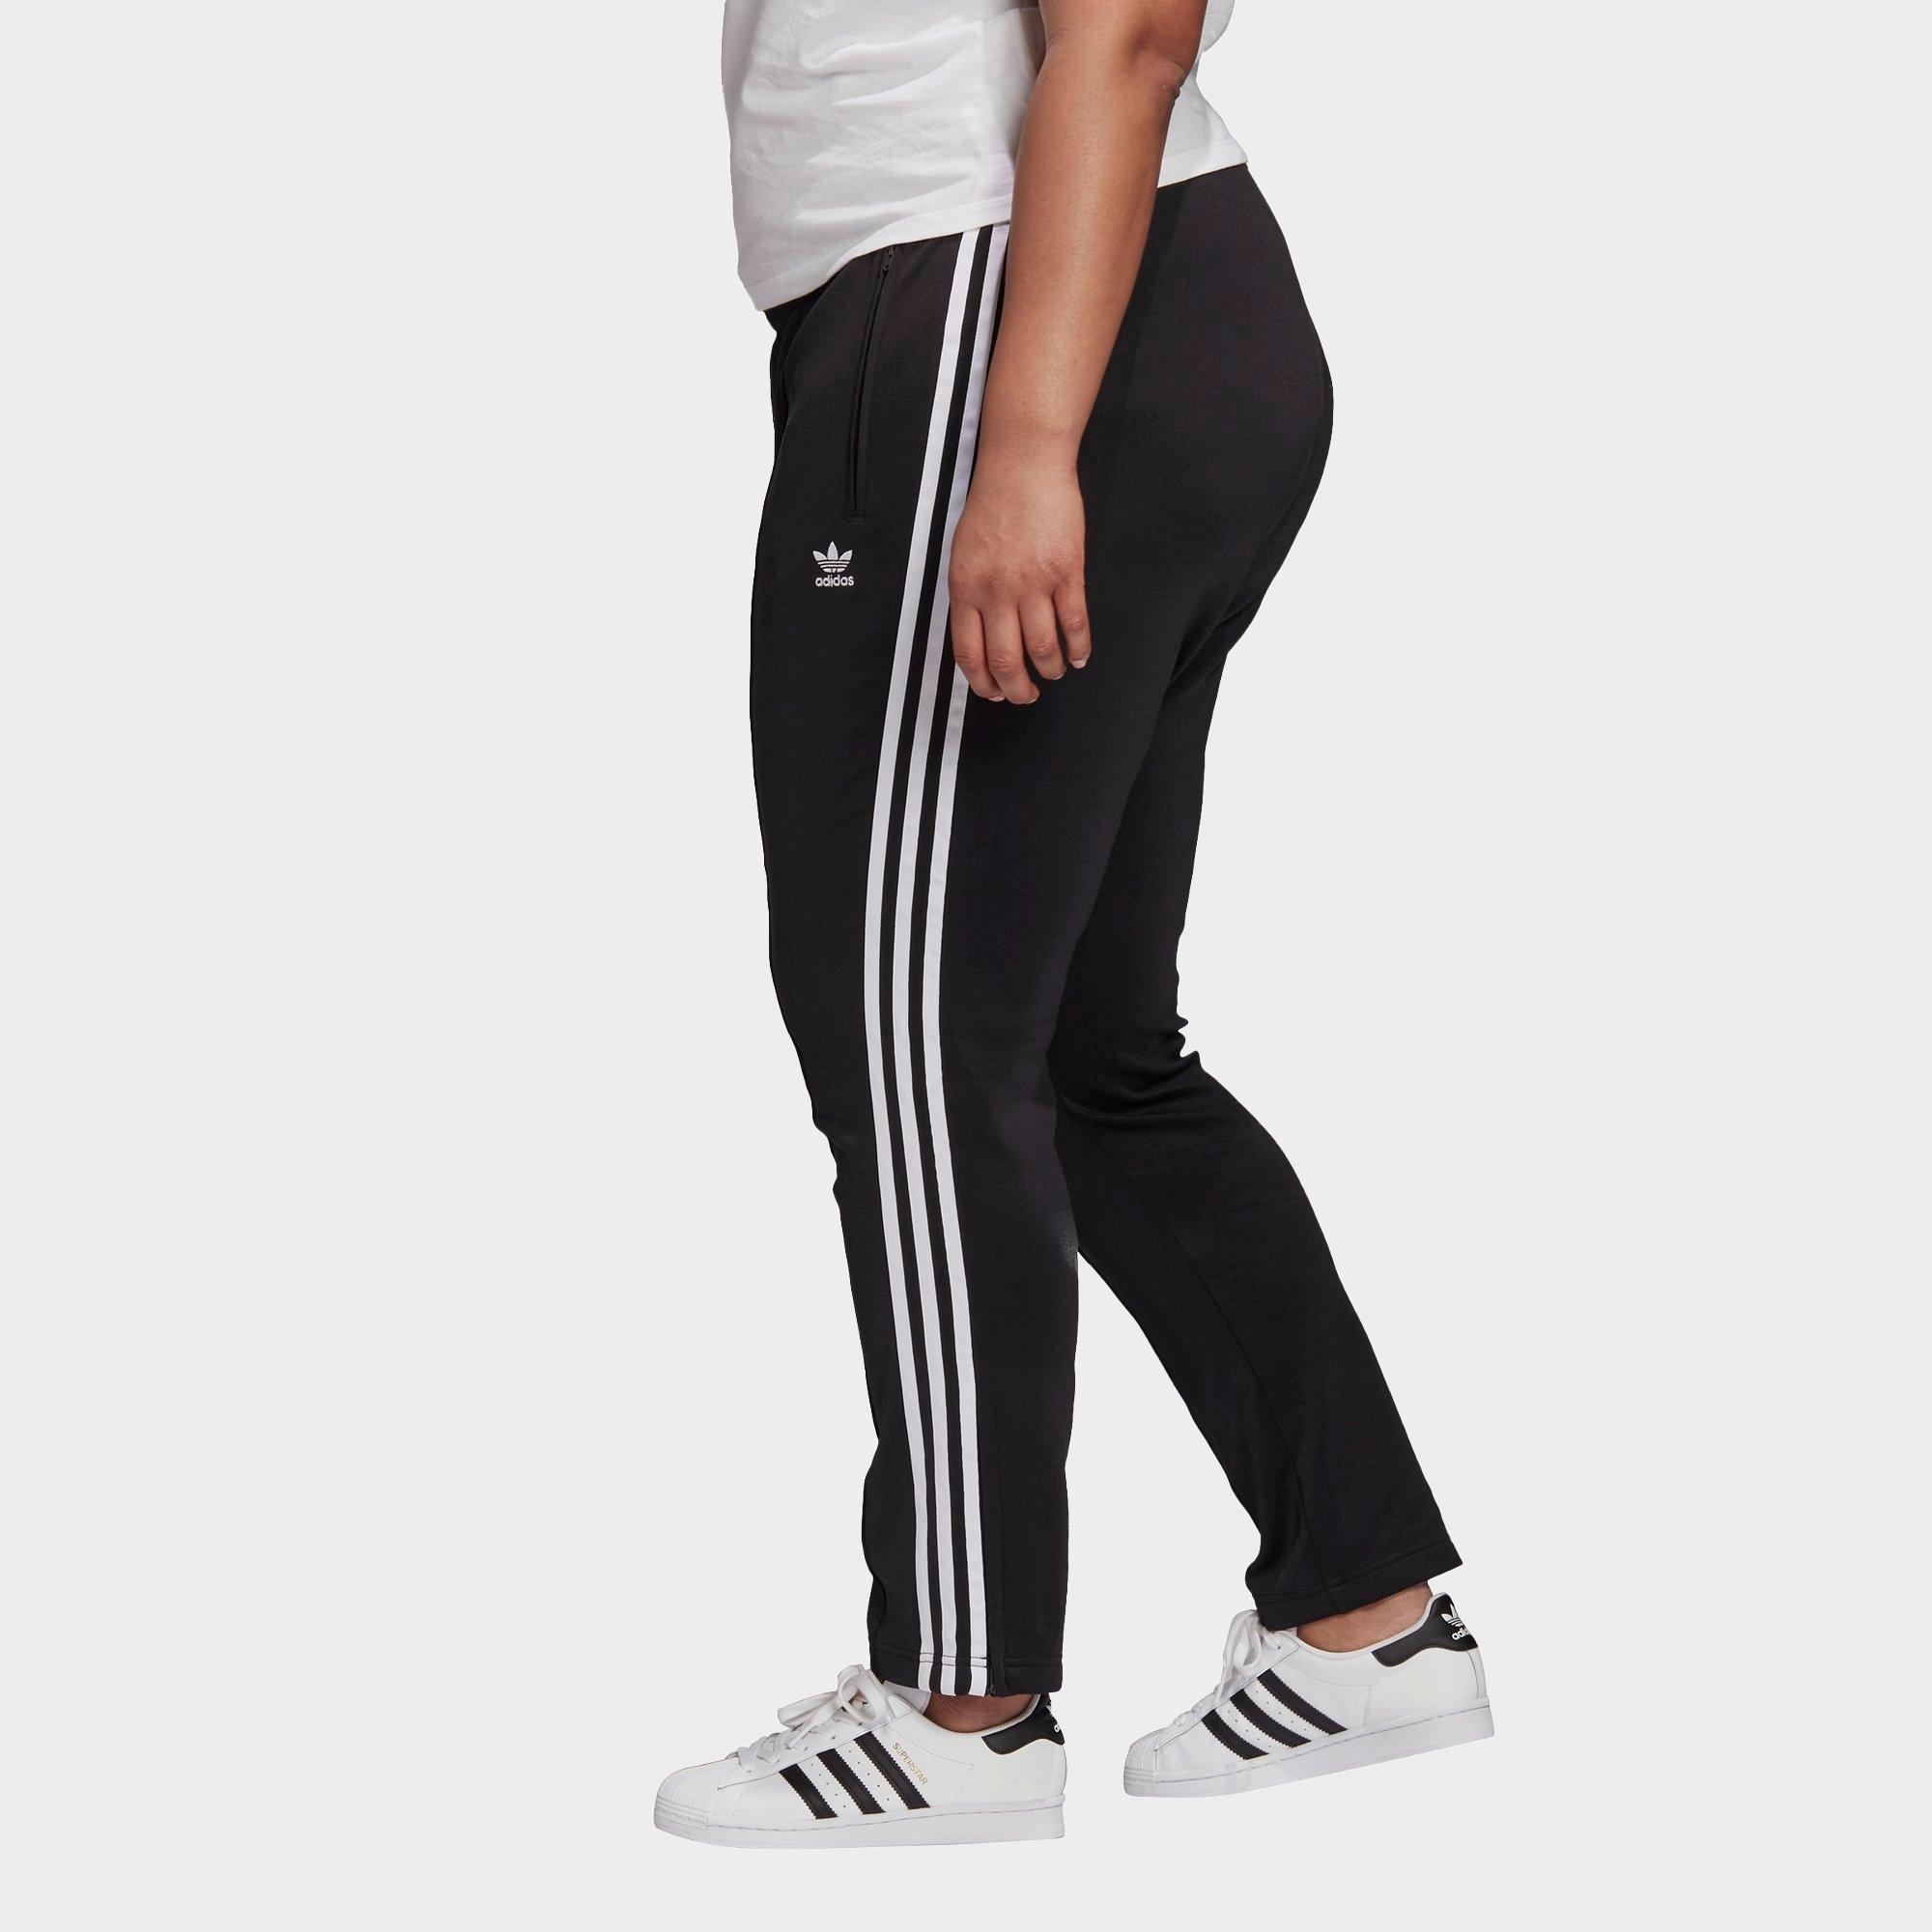 womens adidas leggings plus size